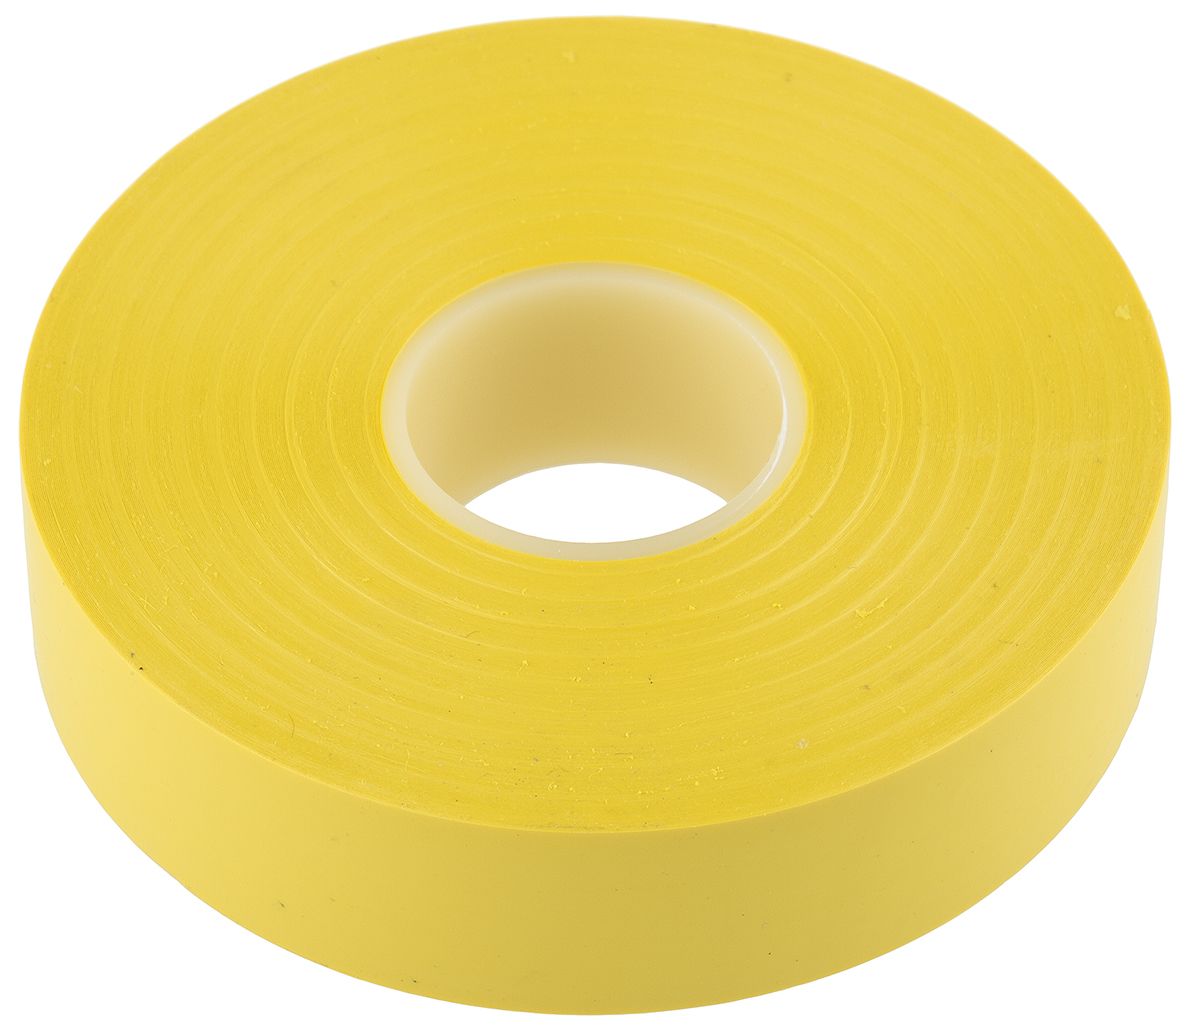 Cinta aislante de PVC Advance Tapes AT7 de color Amarillo, 19mm x 33m, grosor 0.13mm